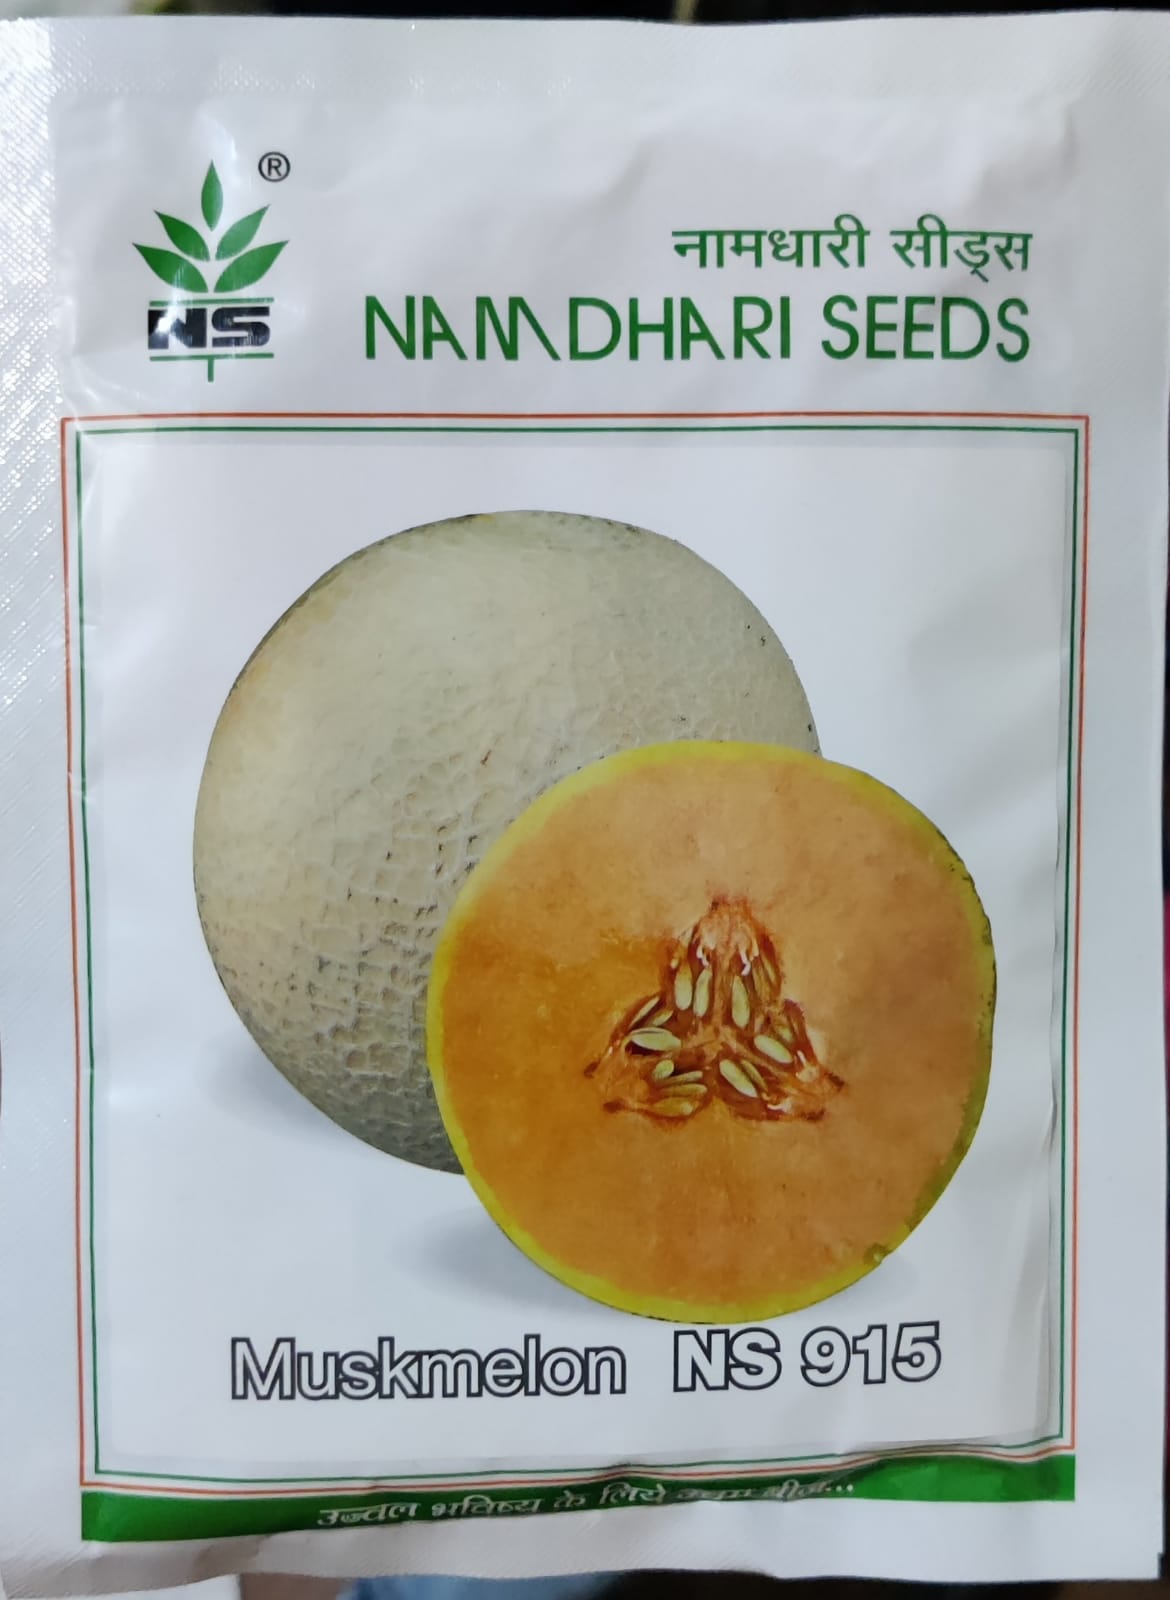 Muskmelon NS 915 (Namdhari Seeds)